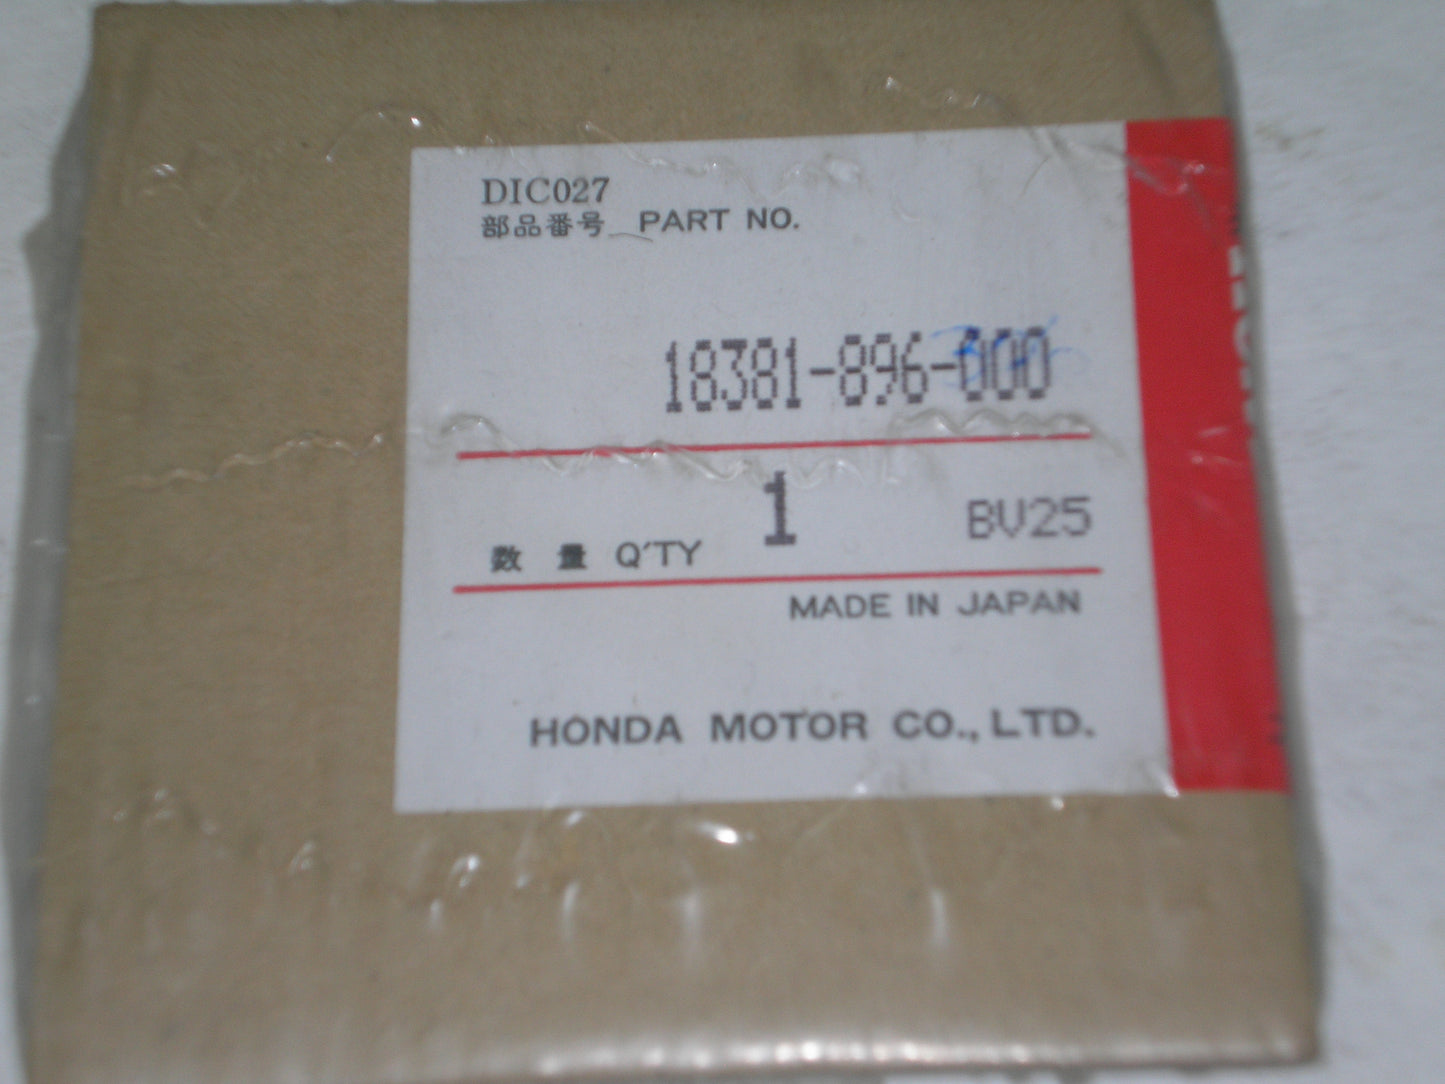 HONDA EX800 F200 WA15 Muffler Gasket 18381-896-000 / 18381-896-306